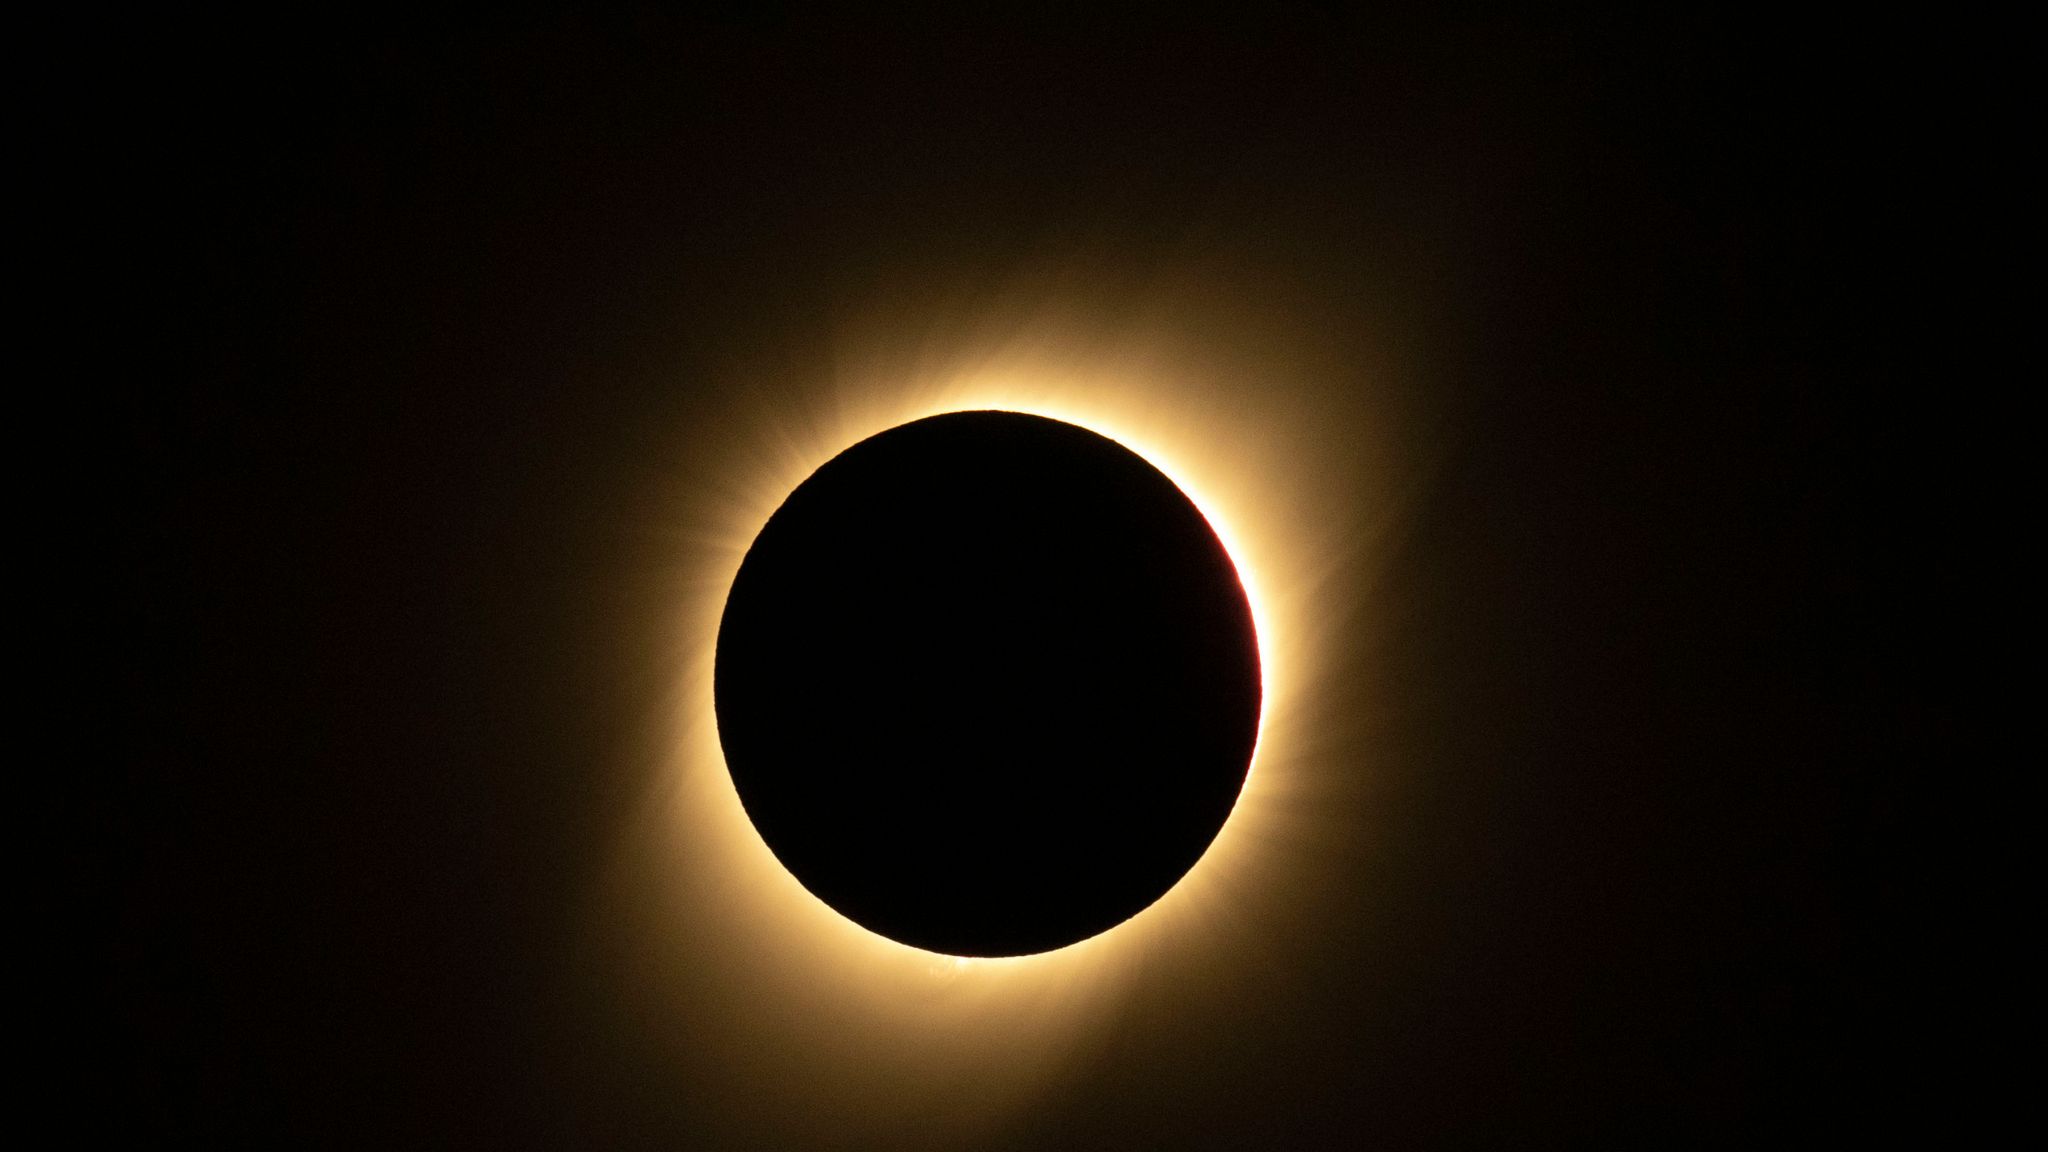 Lunar satellite captures stunning images of solar eclipse World News